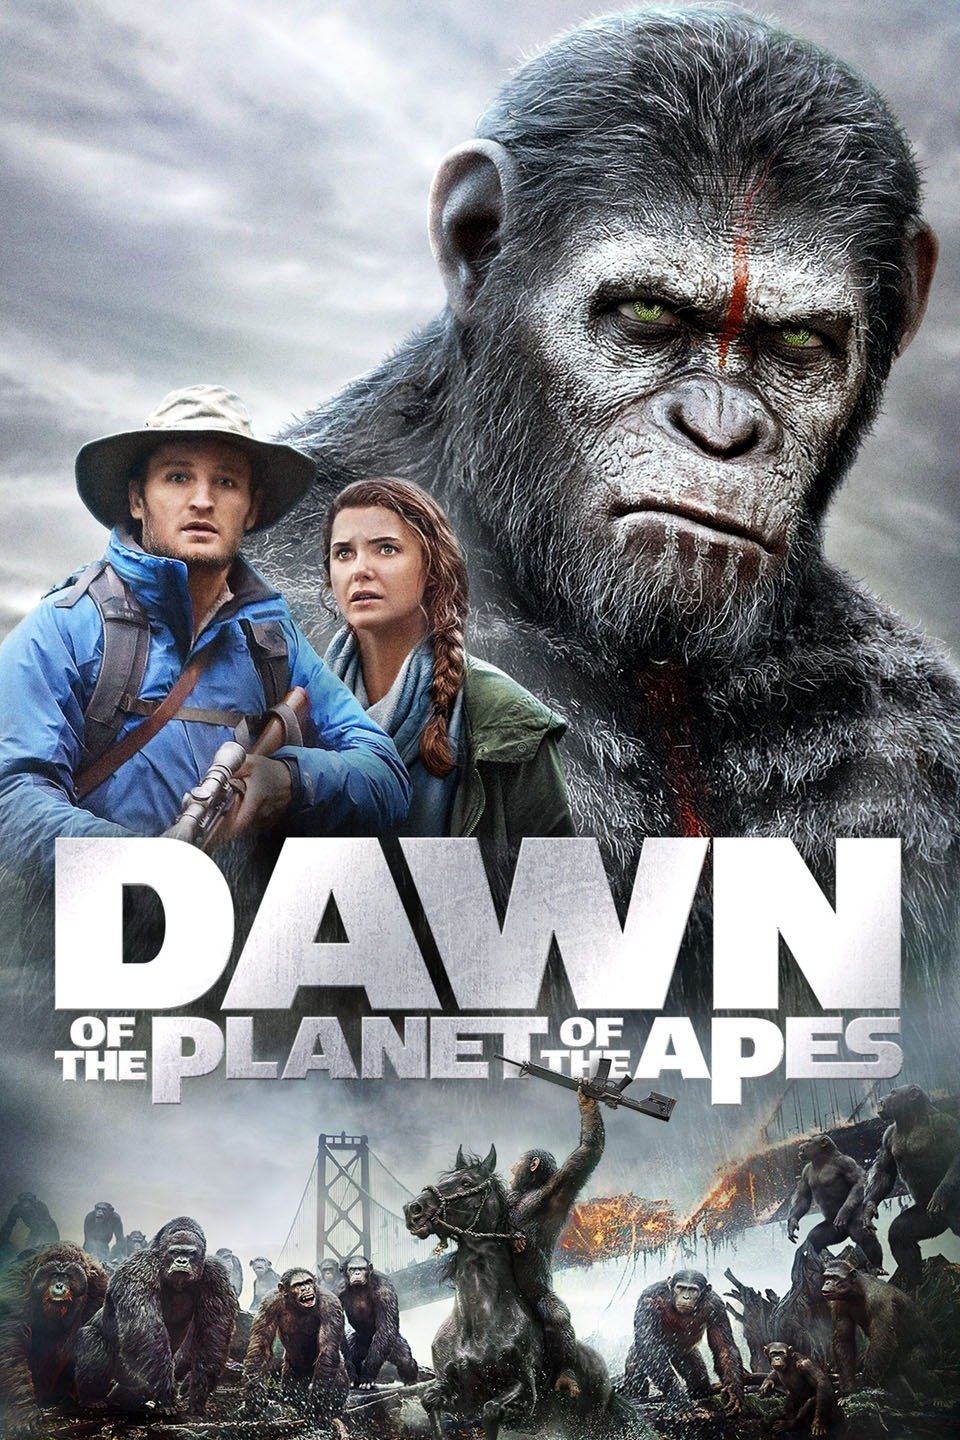 [MINI-HD] Dawn of the Planet of the Apes (2014) รุ่งอรุณแห่งพิภพวานร [1080p] [พากย์ไทย 5.1 + อังกฤษ DTS] [บรรยายไทย + อังกฤษ] [เสียงไทย + ซับไทย] [ONE2UP]